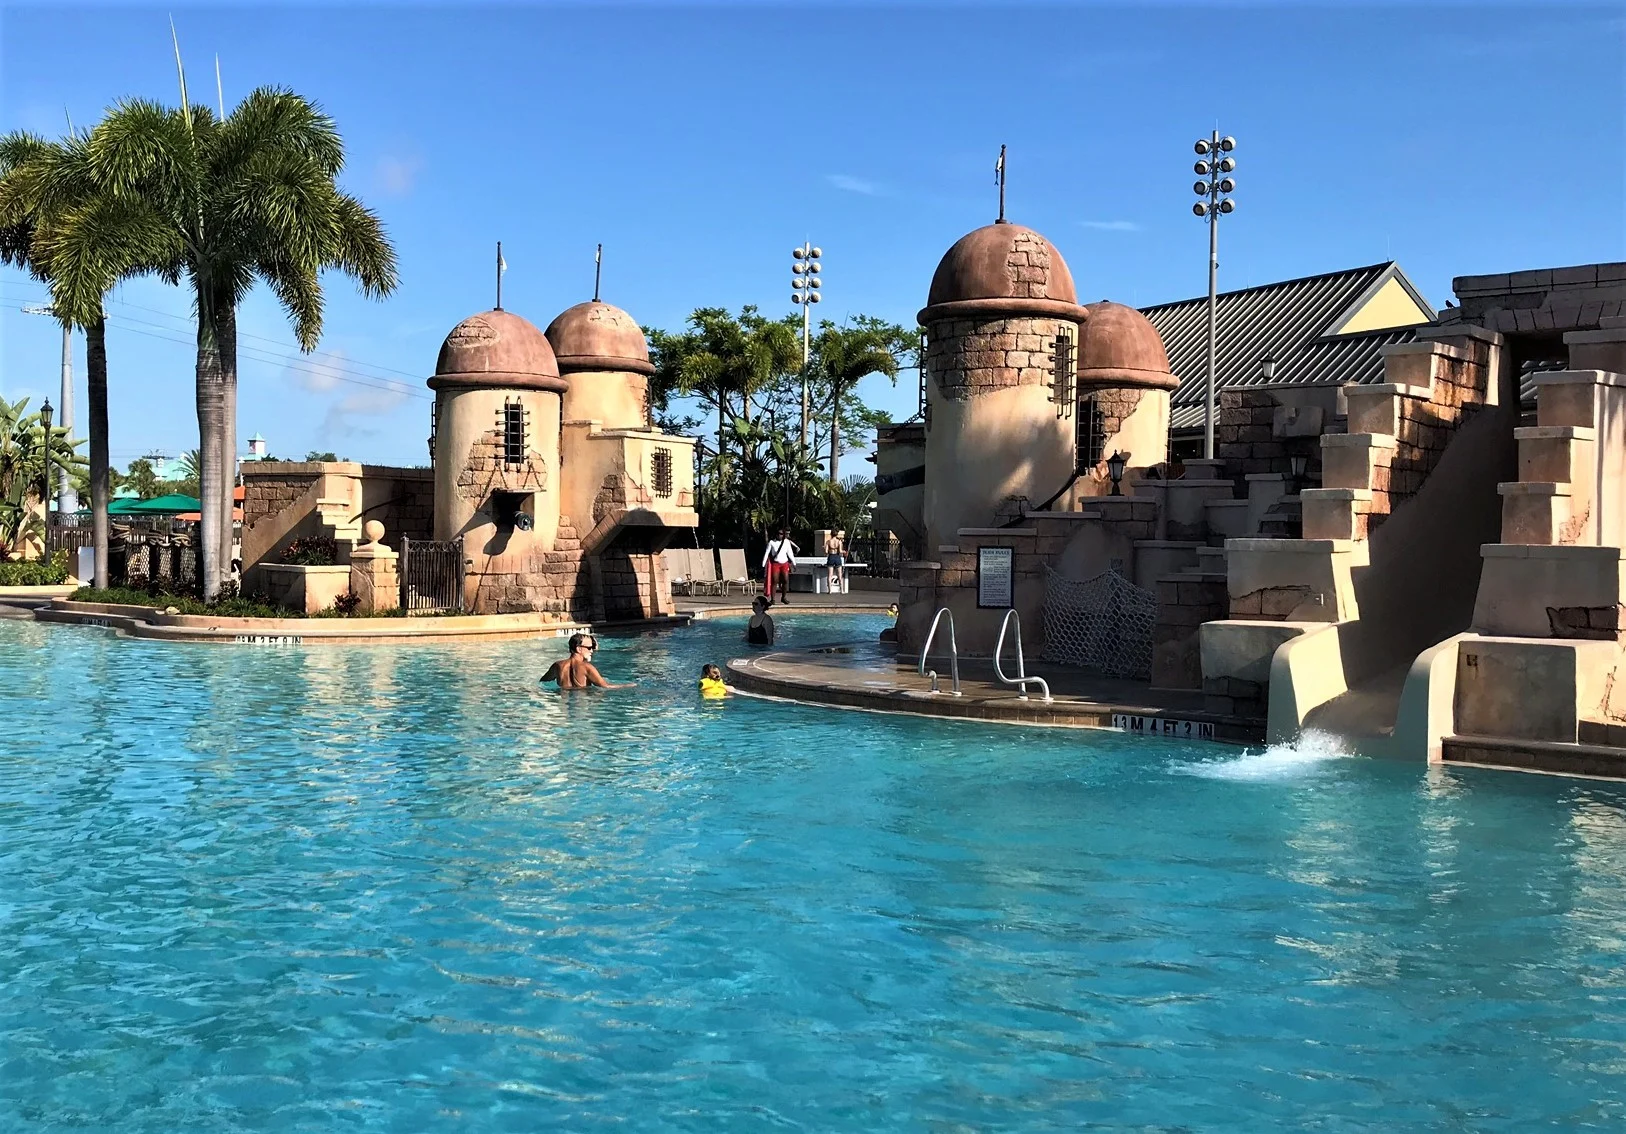 Disney's Caribbean beach resort pool complex